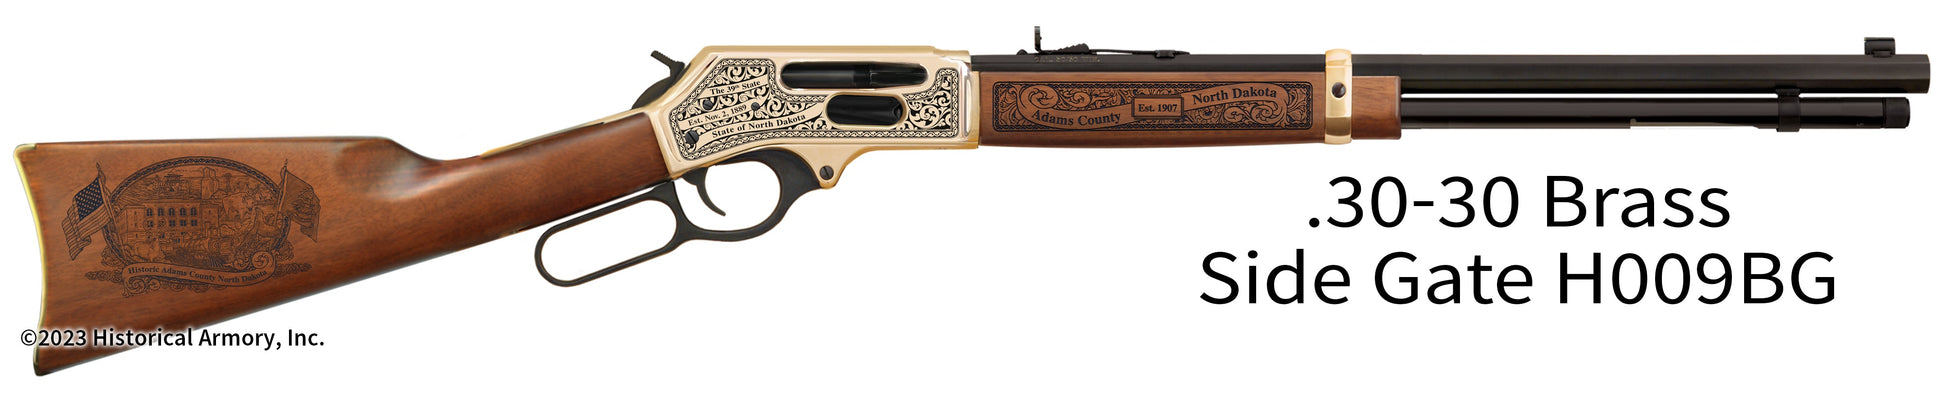 Adams County North Dakota Engraved Henry .30-30 Brass Side Gate Rifle